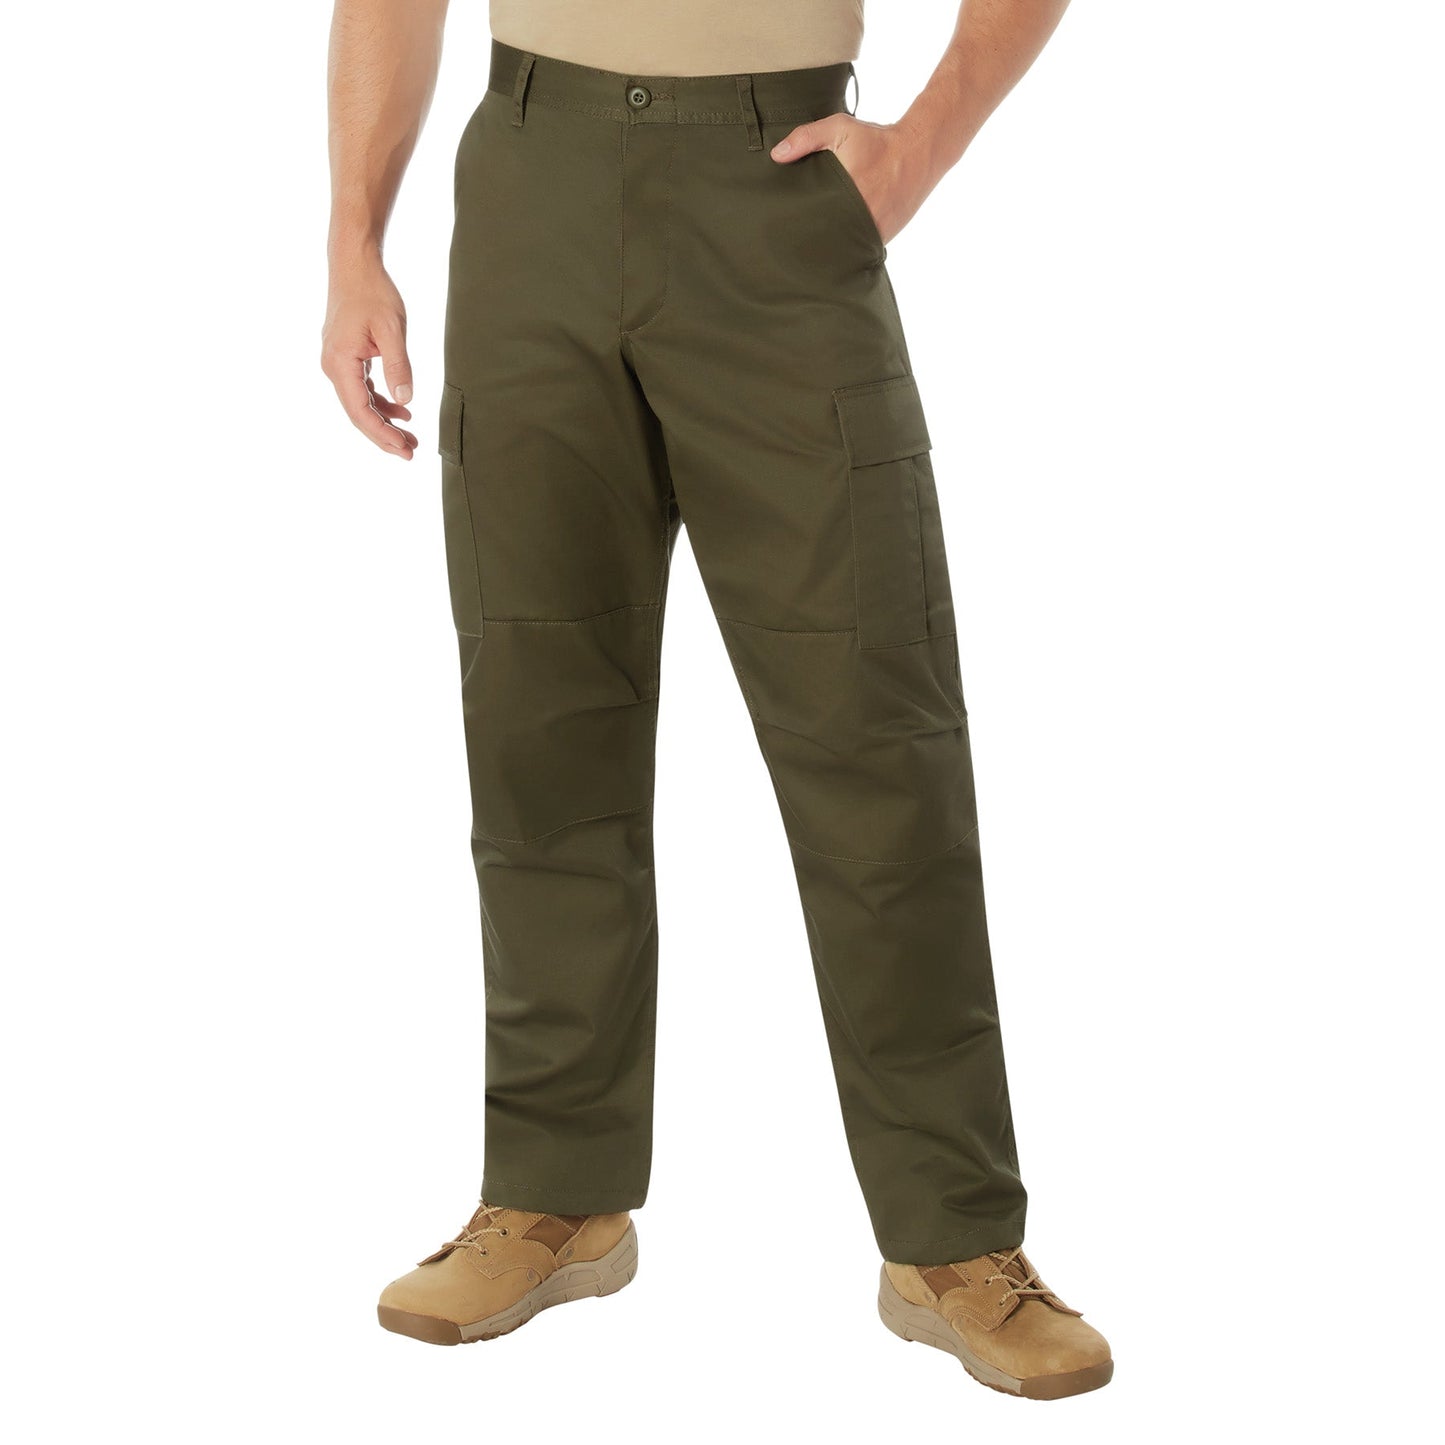 Rothco Tactical BDU Cargo Pants - Cadet Blue